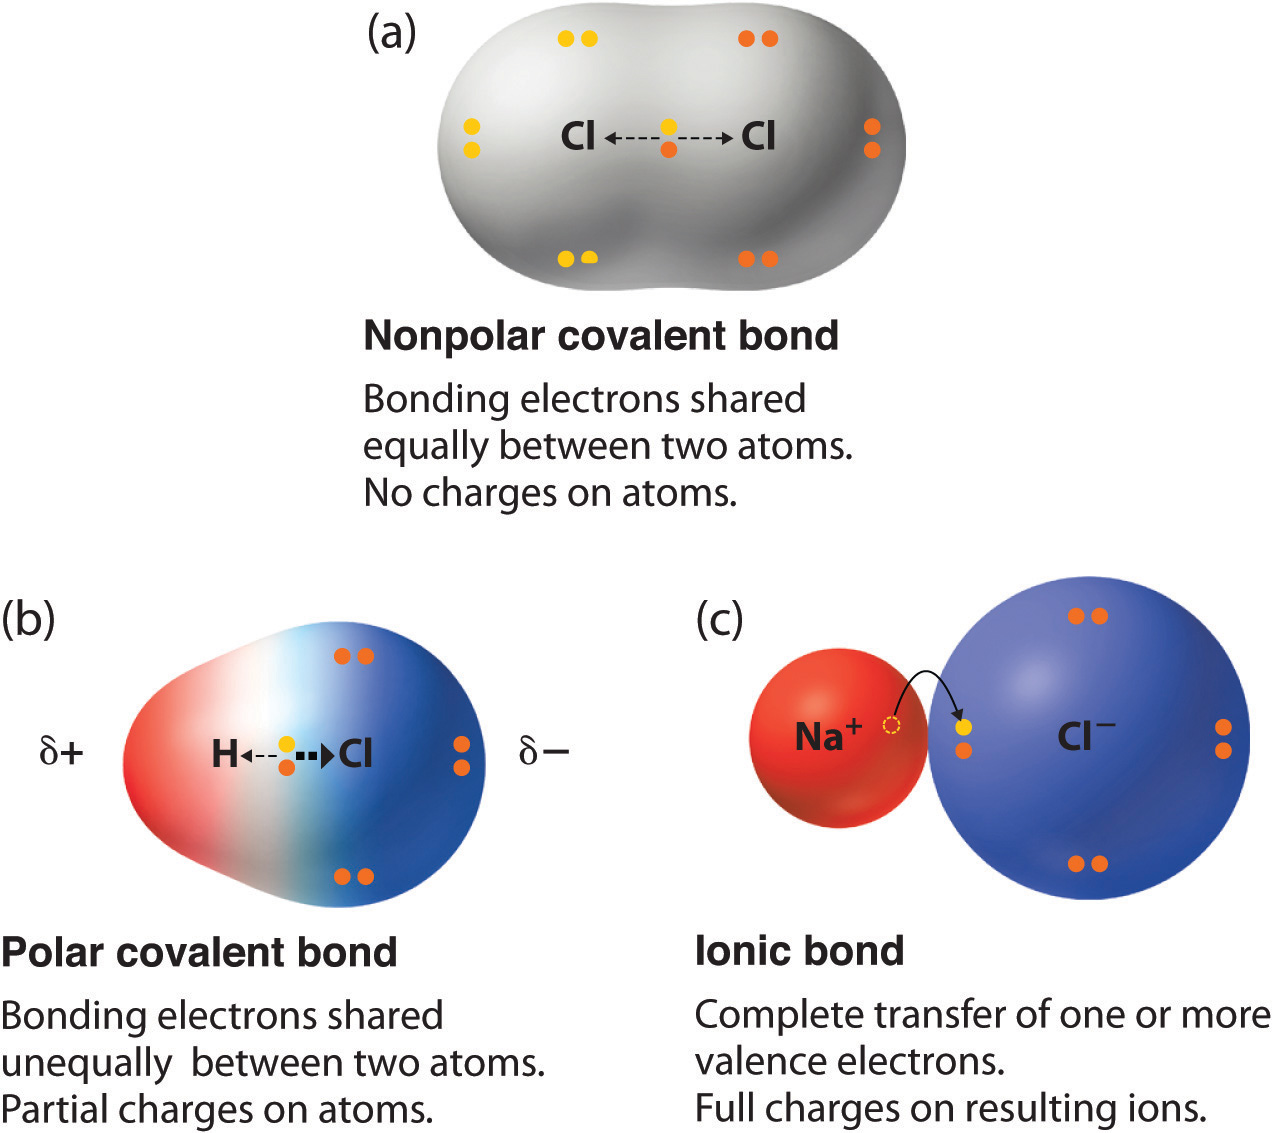 Polar Covalent Bonds